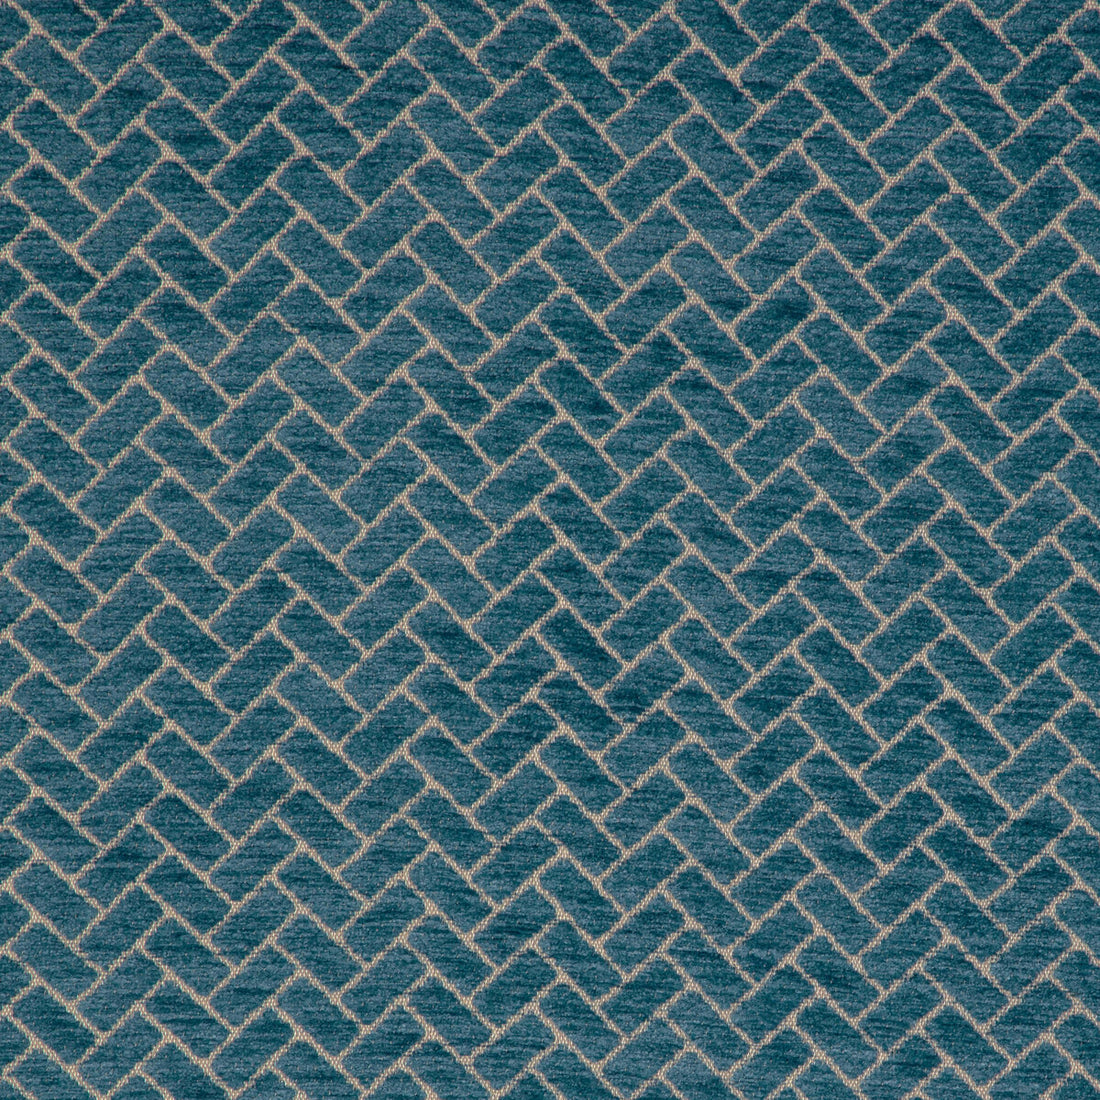 Kravet Smart fabric in 37003-35 color - pattern 37003.35.0 - by Kravet Smart in the Pavilion collection